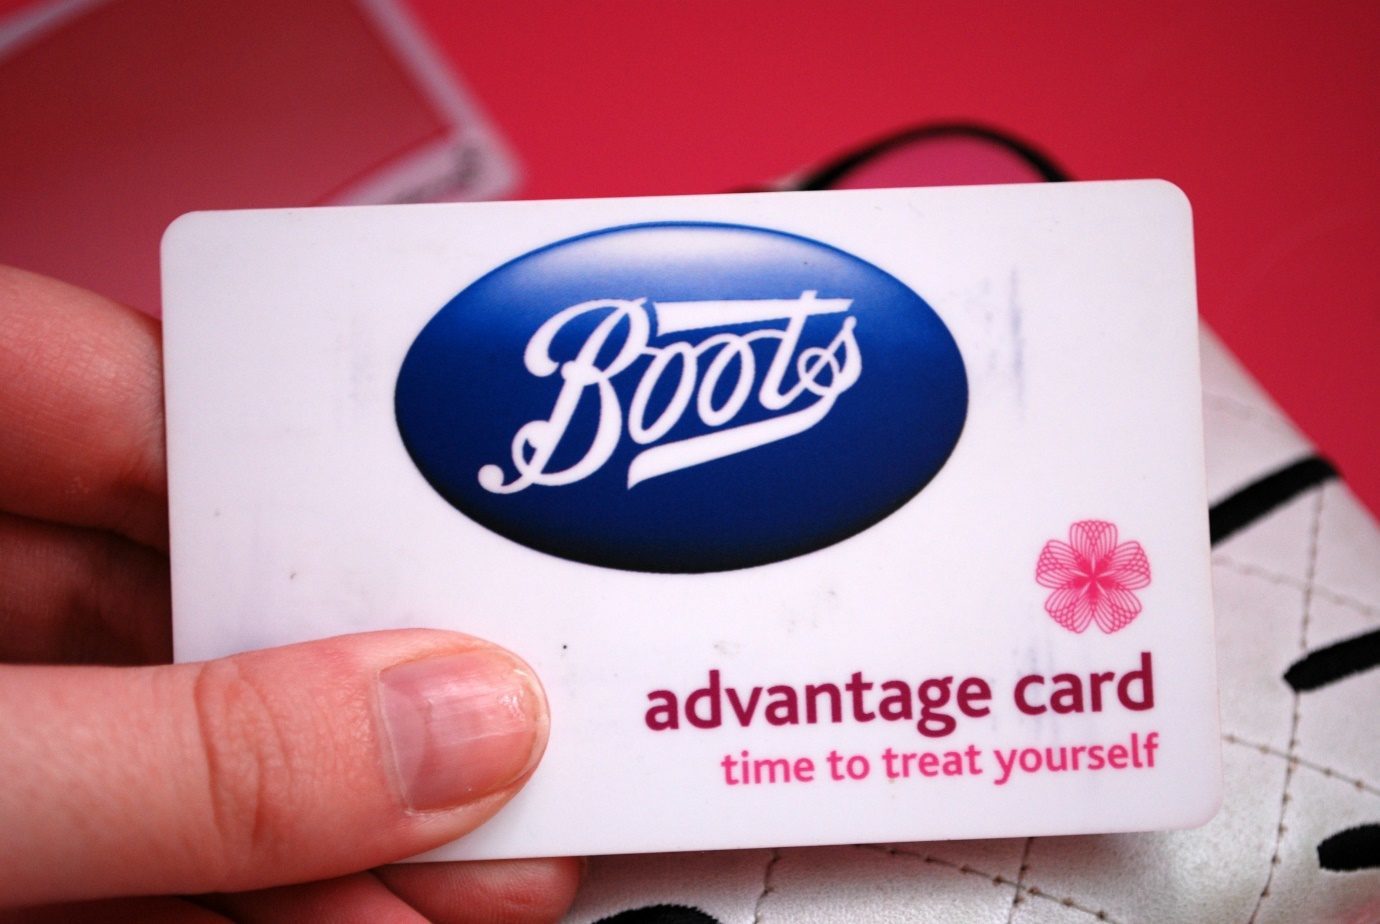 Boots advantage card